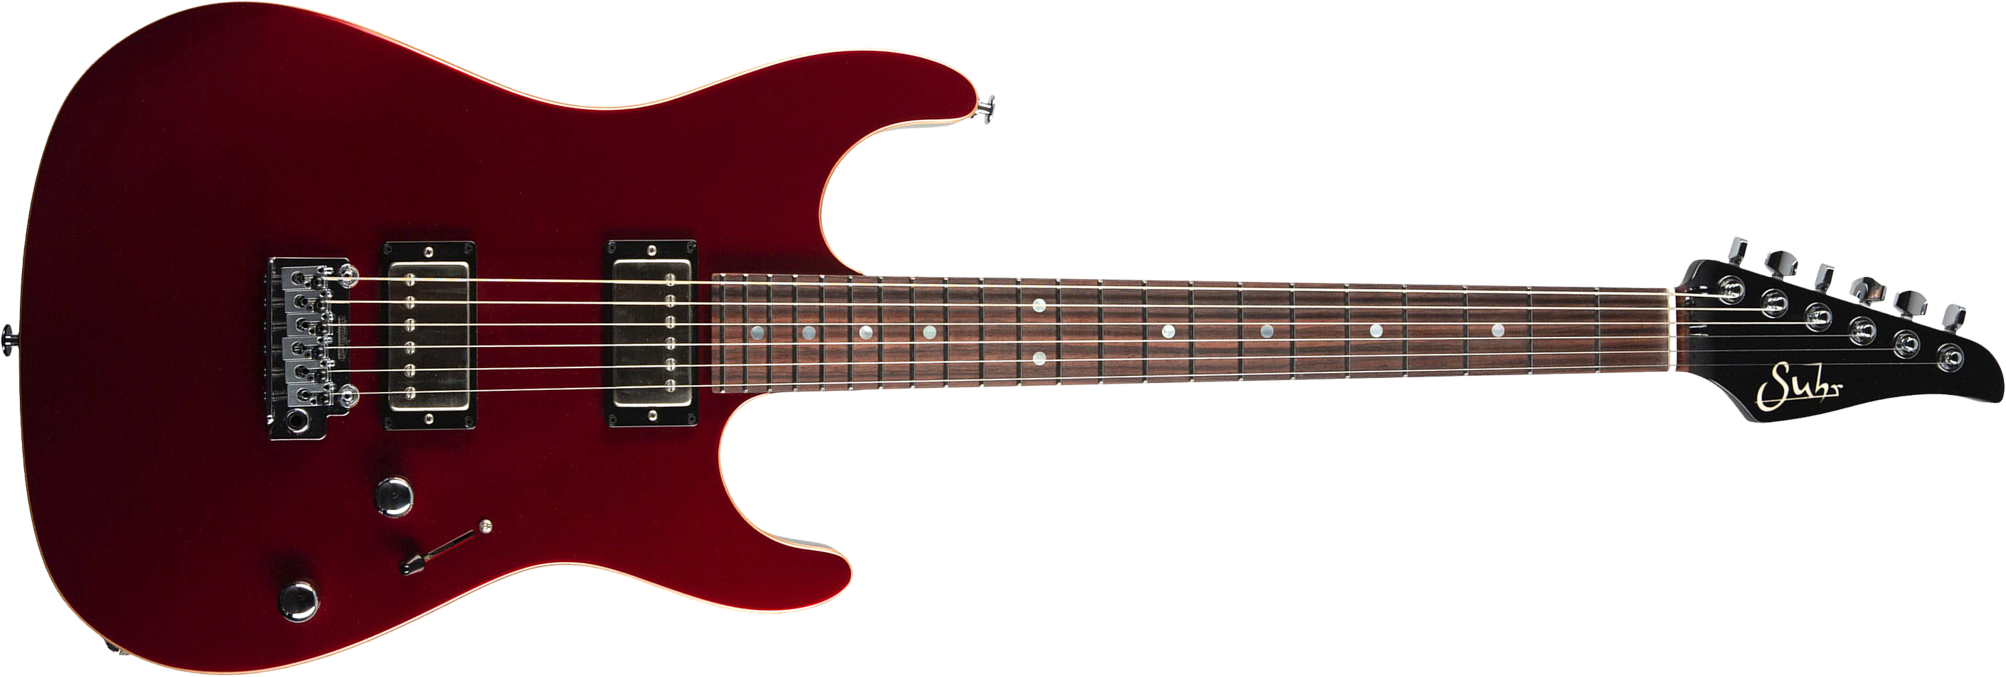 Suhr Pete Thorn Standard 01-sig-0029 Signature 2h Trem Rw - Garnet Red - Guitarra eléctrica con forma de str. - Main picture